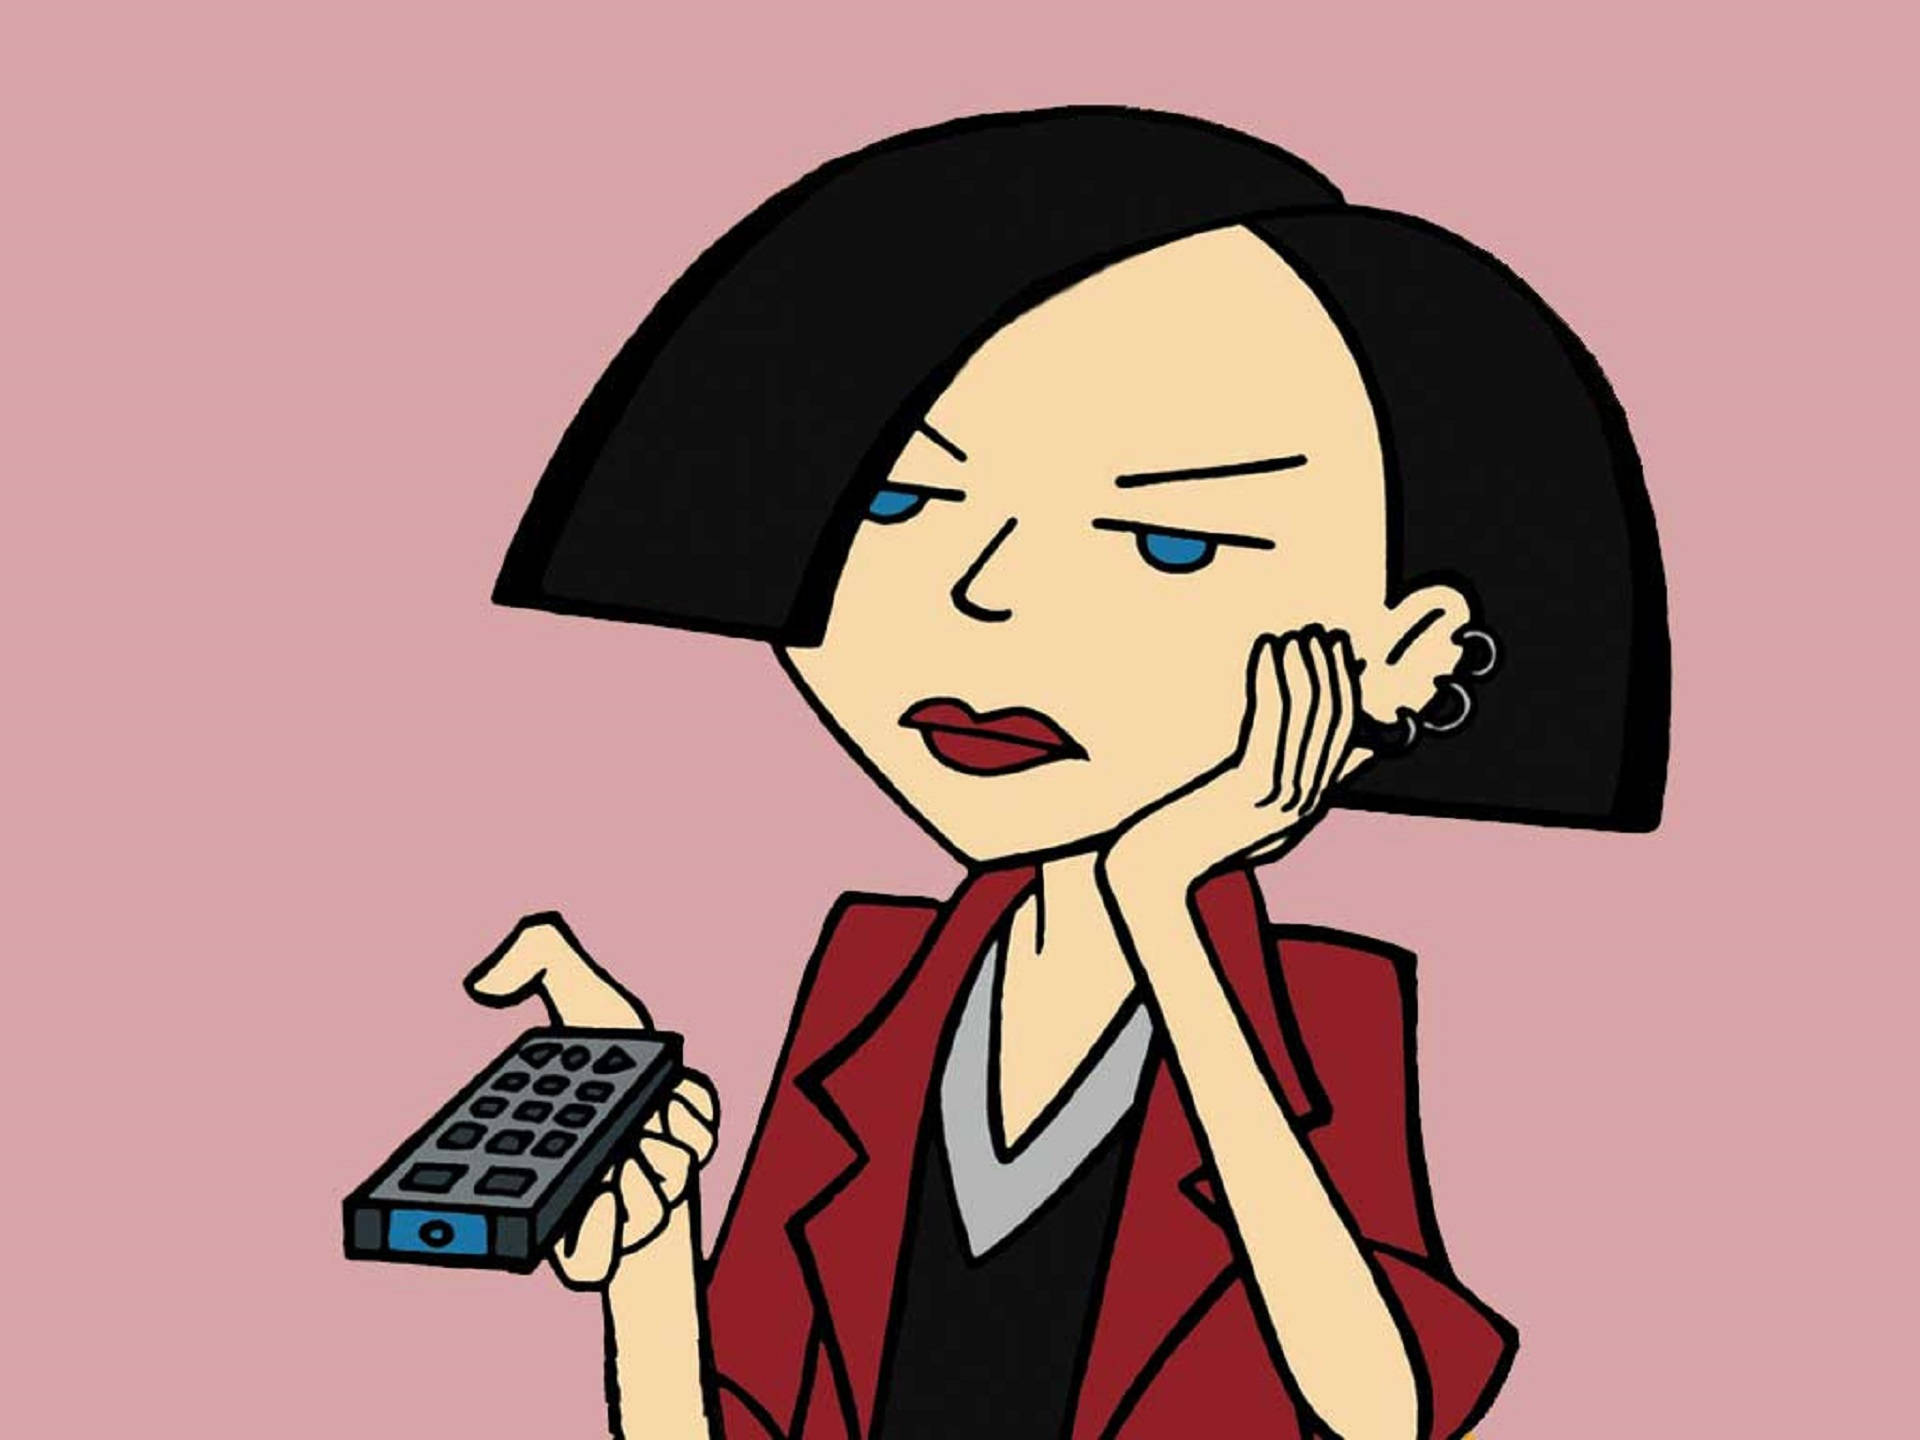 Animated Character Jane Lane From Daria